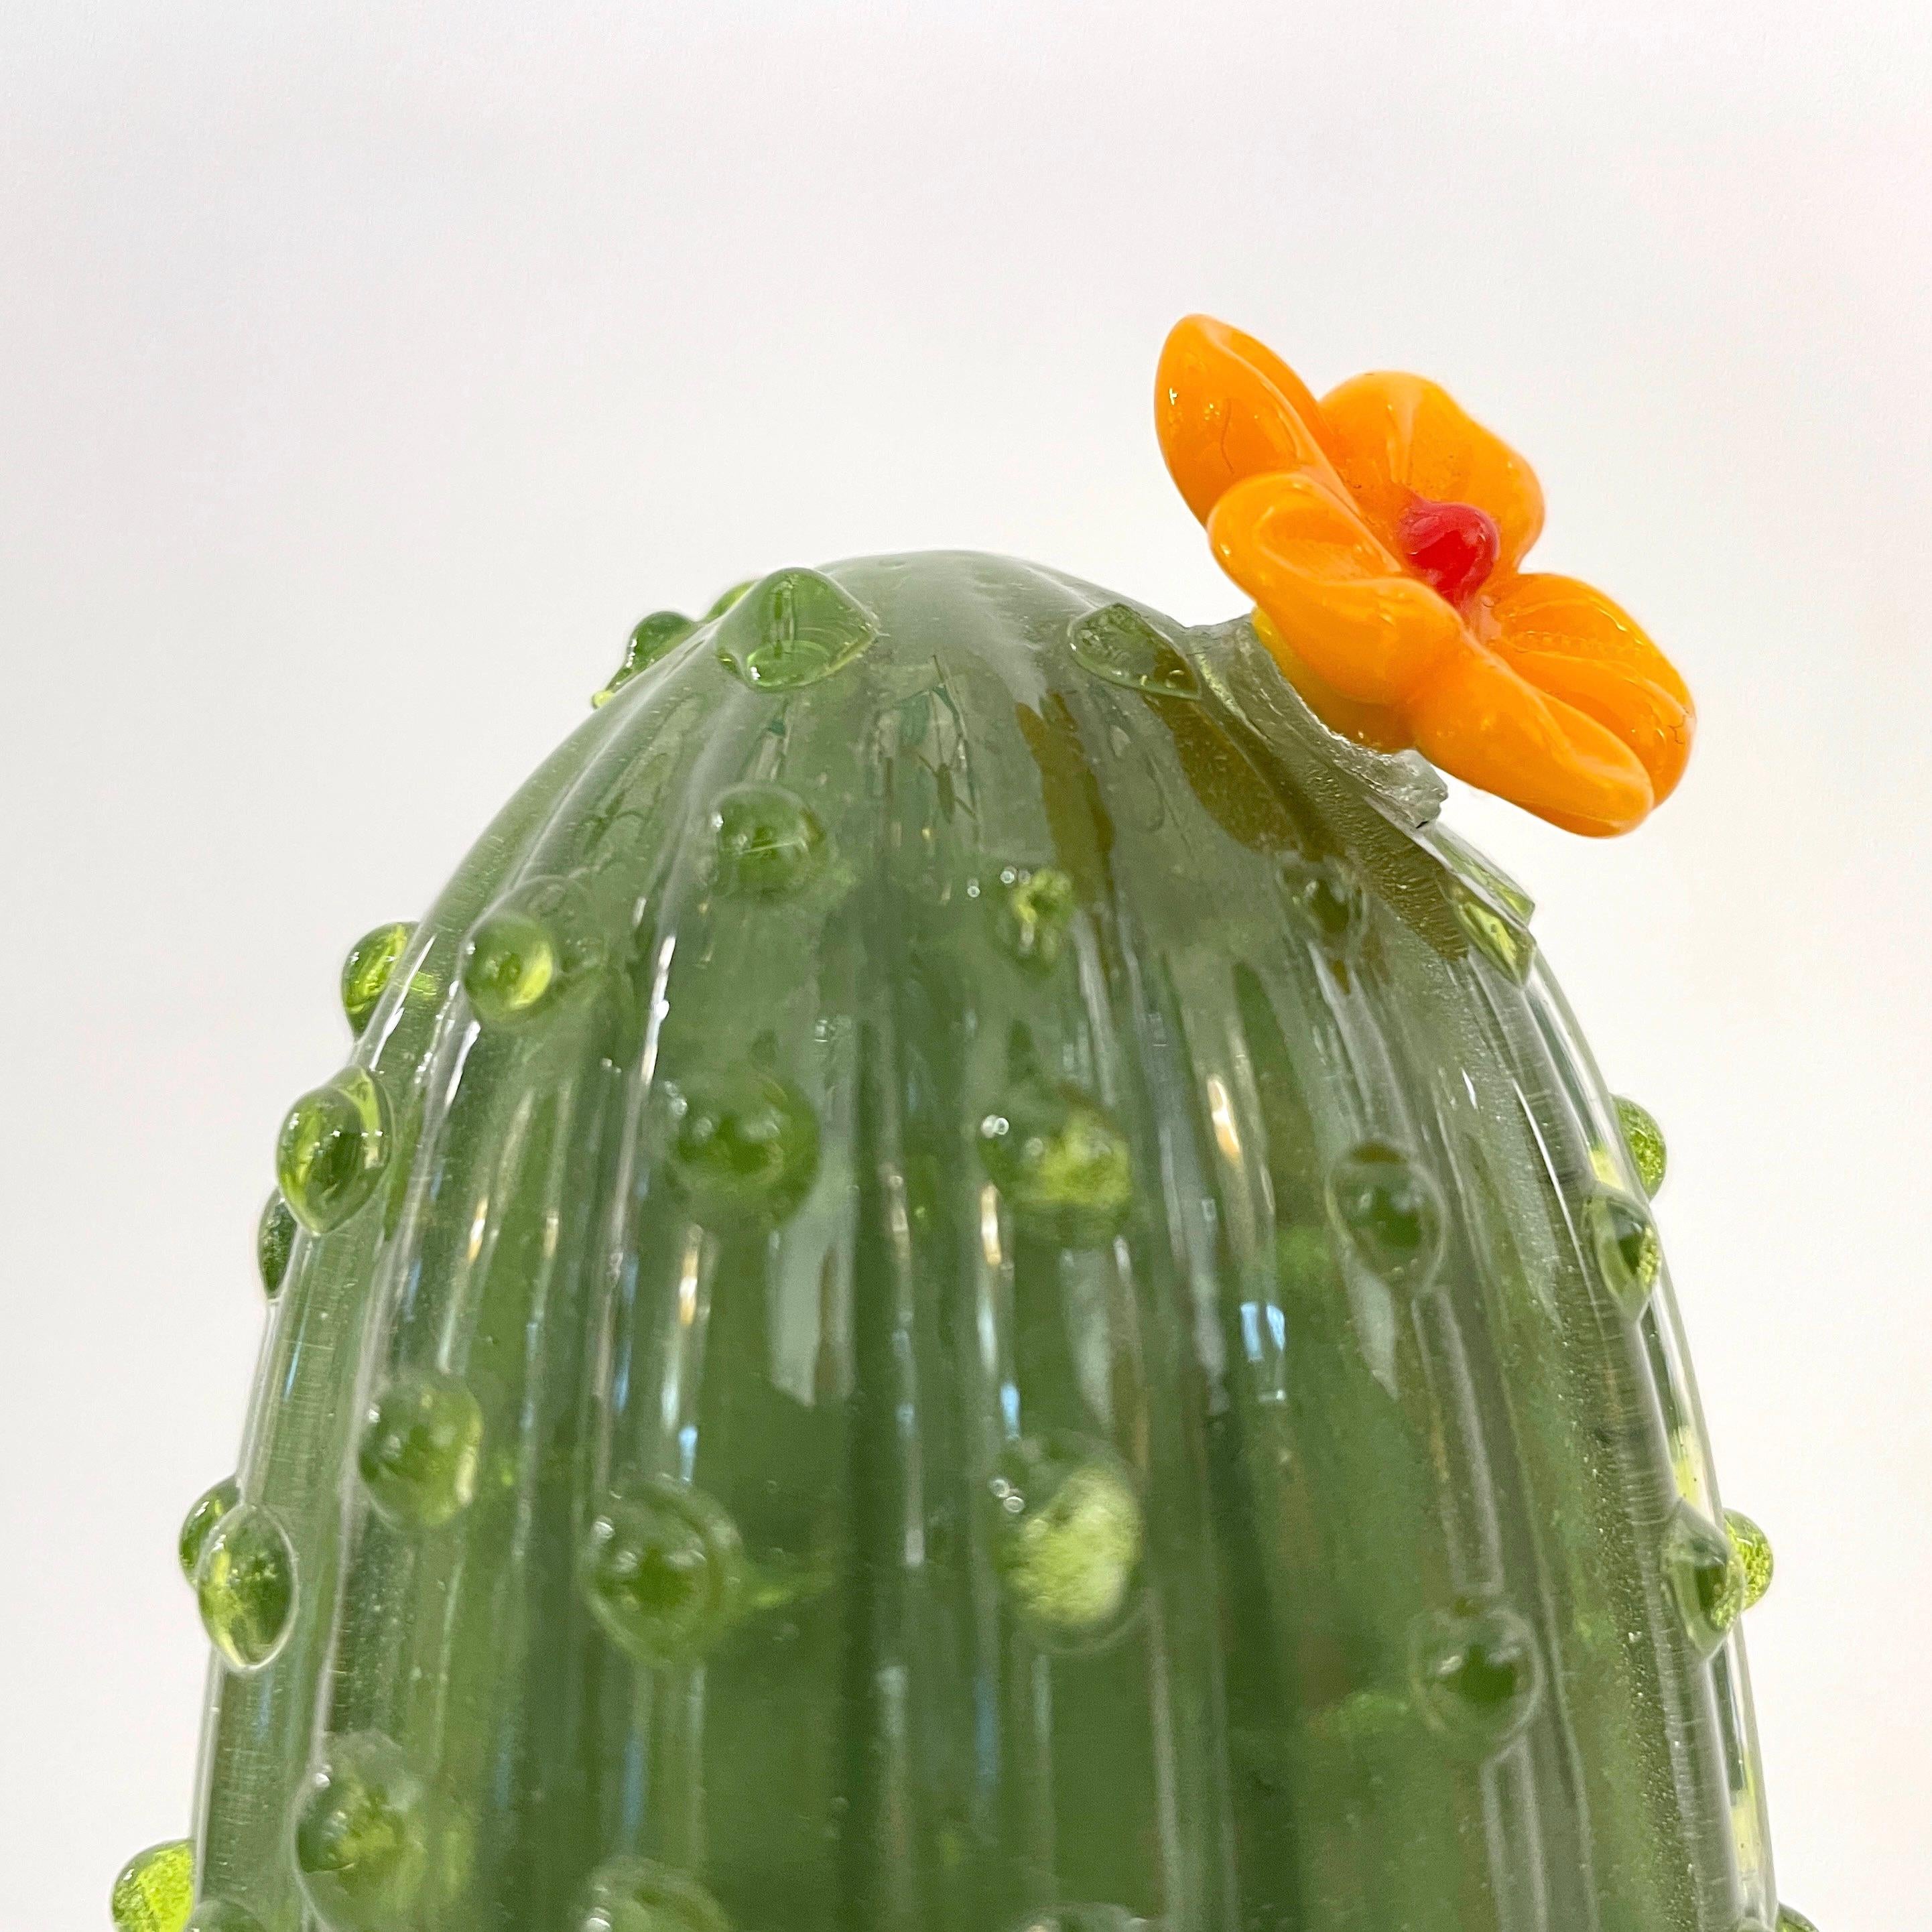 1990s Vintage Italian Green Murano Glass Tall Cactus Plant with Orange Flower 7